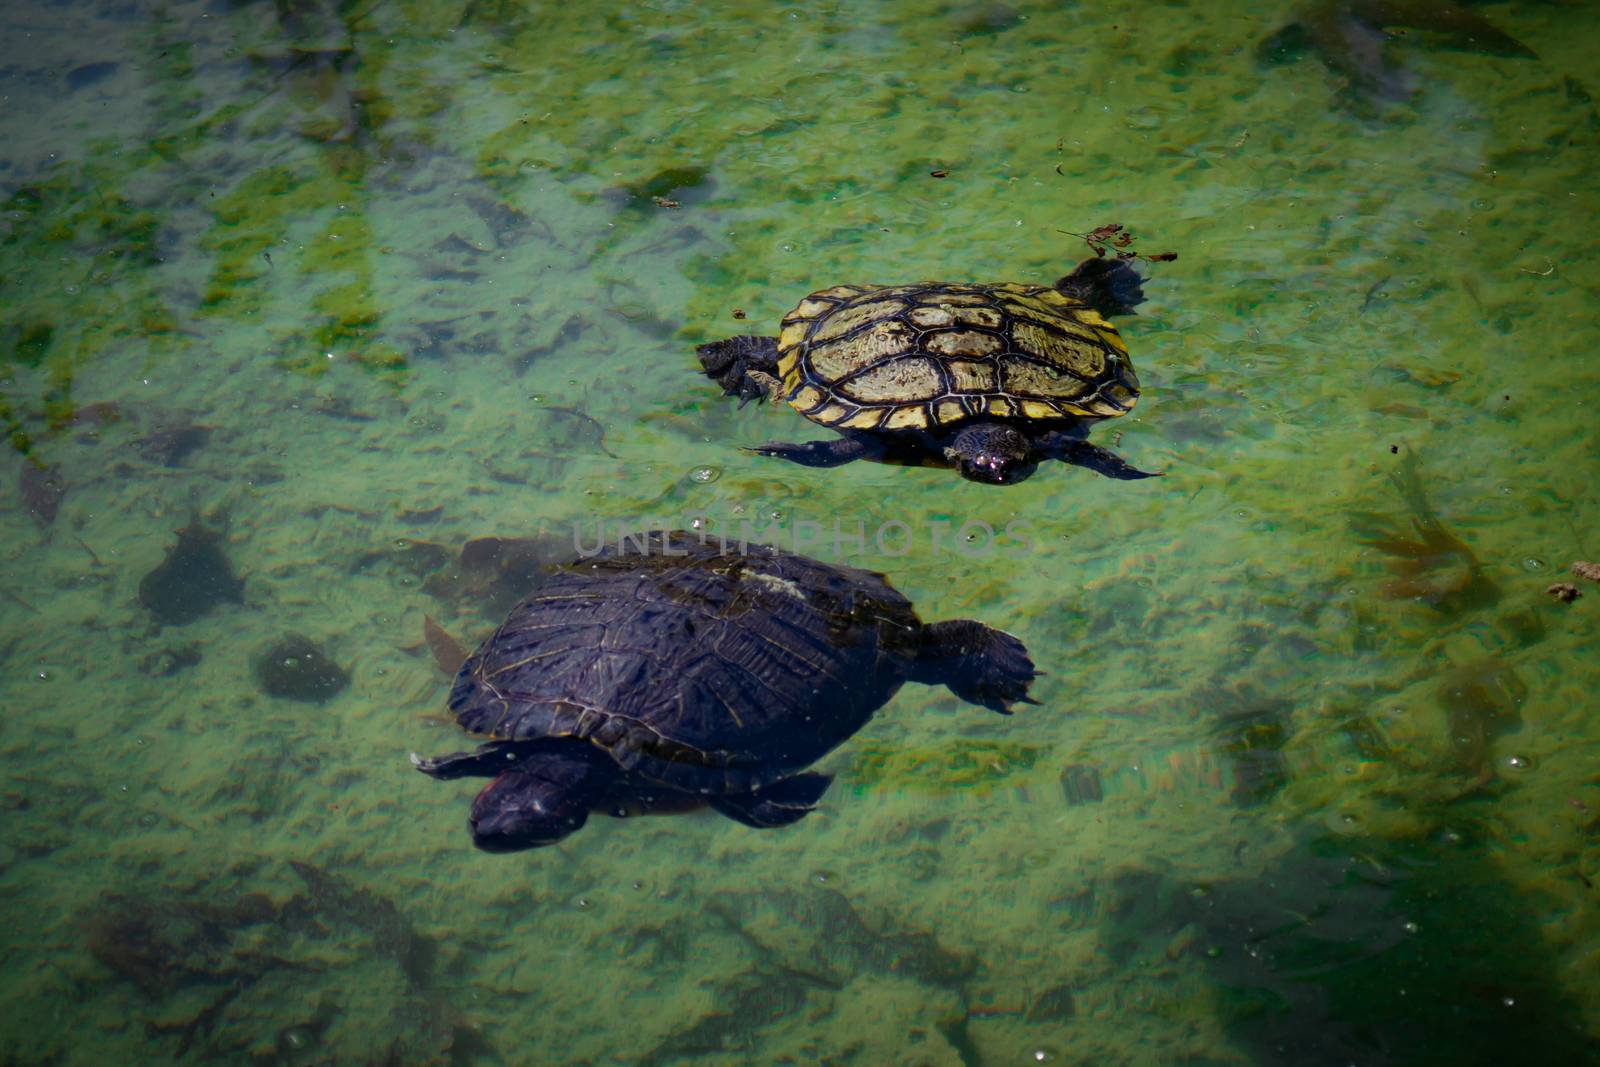 2 pond slider turtles (Trachemys scripta) are swimming in a pond by AlonaGryadovaya